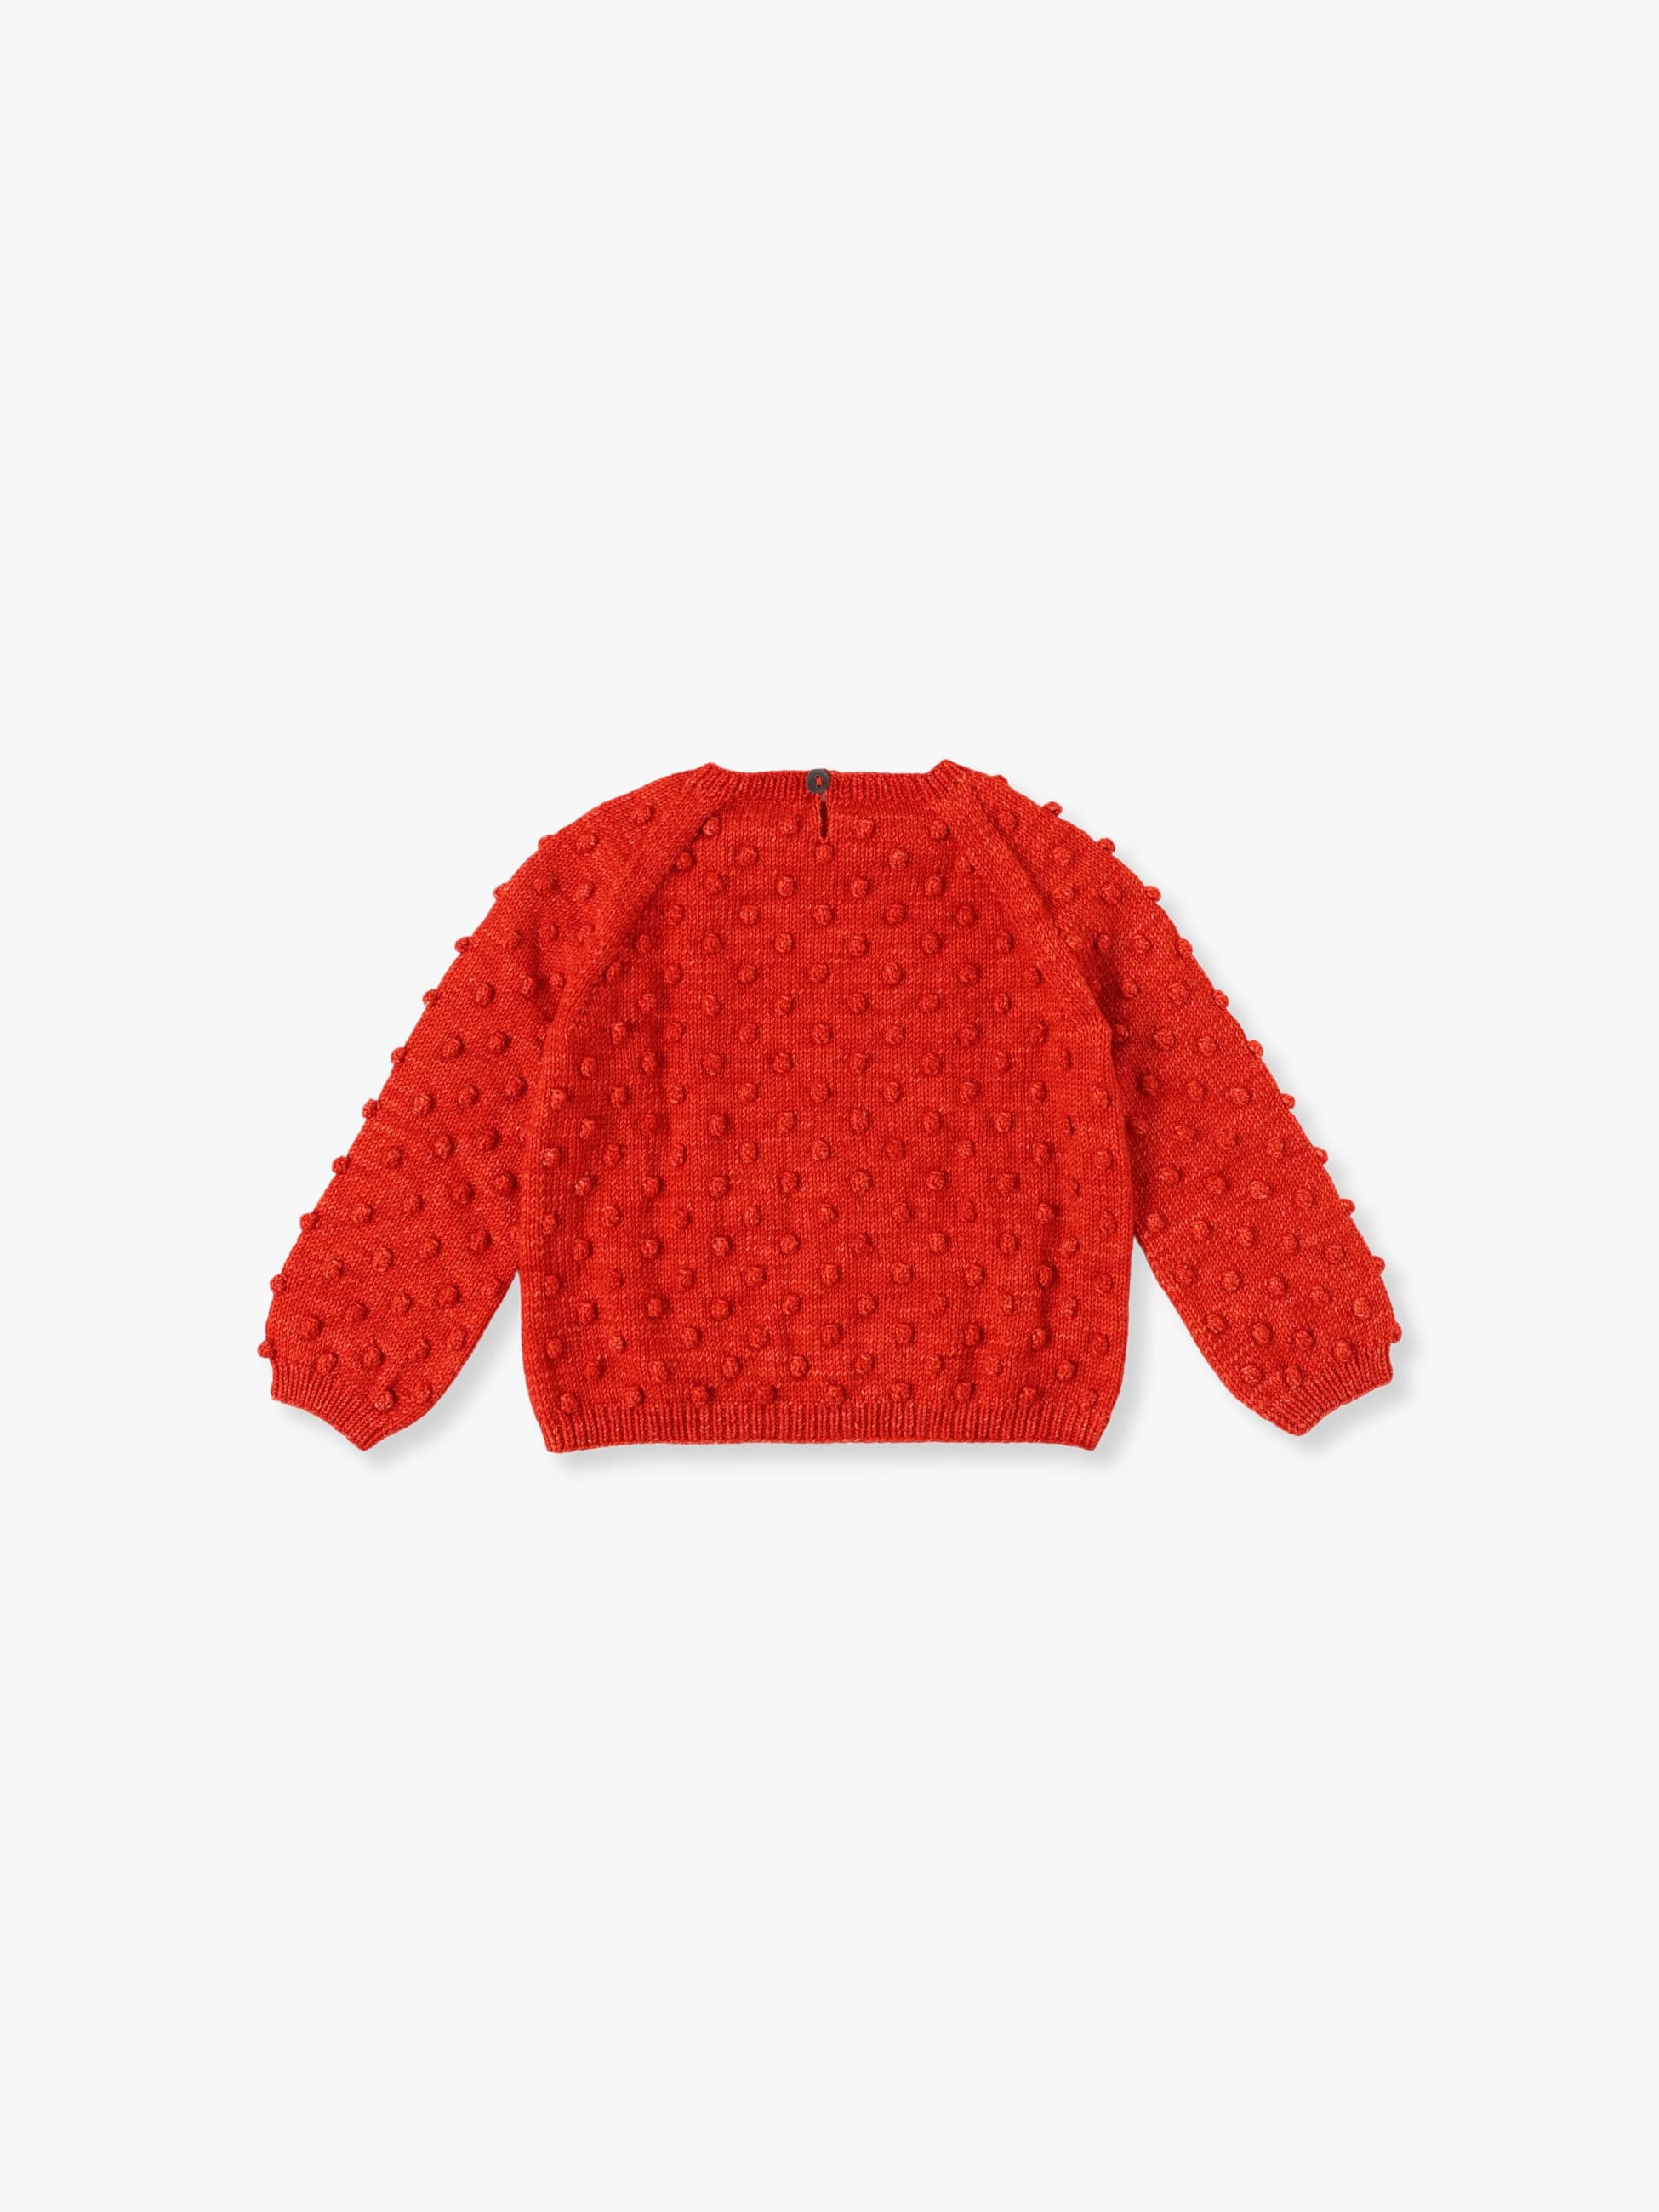 Misha&Puff  Popcorn Sweater  セーター